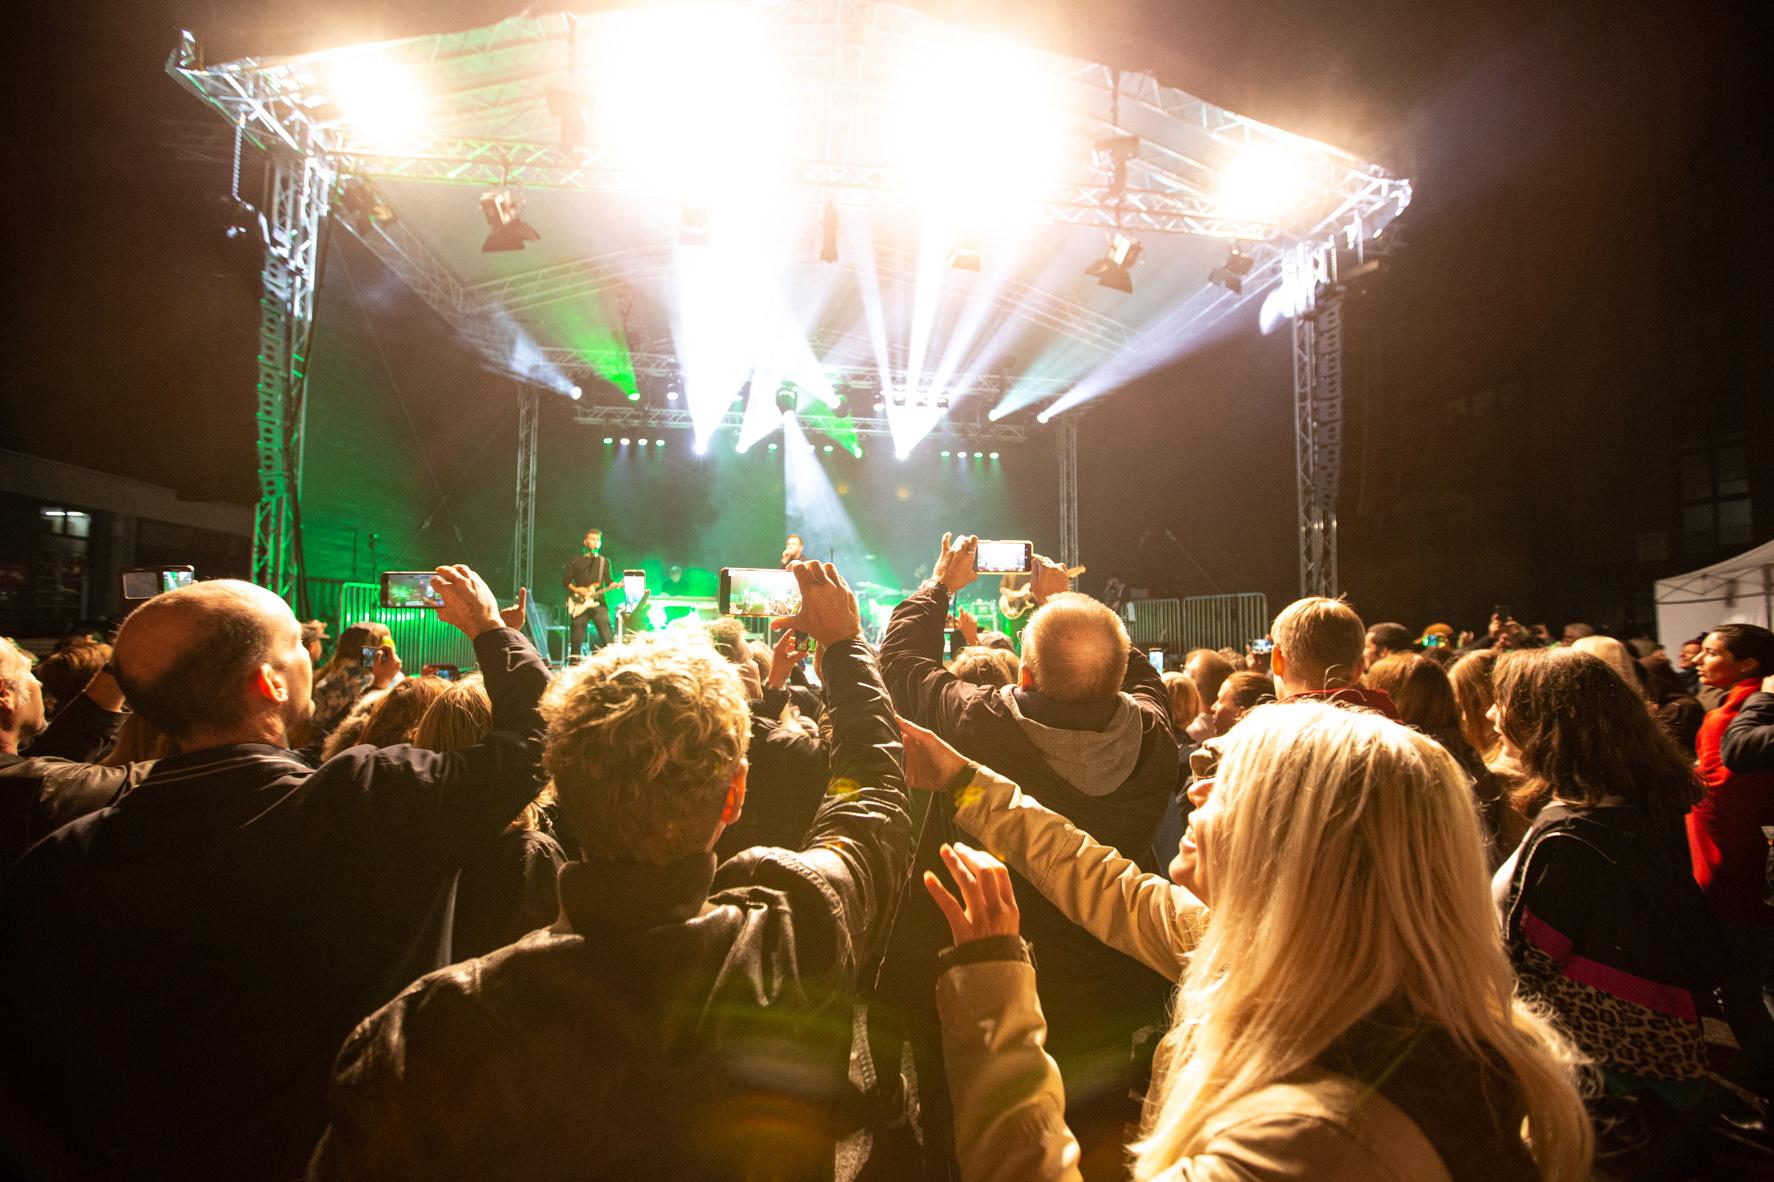 Knapp 1.500 Musikbegeisterte beim Stadtfest in der ehemaligen Semperit